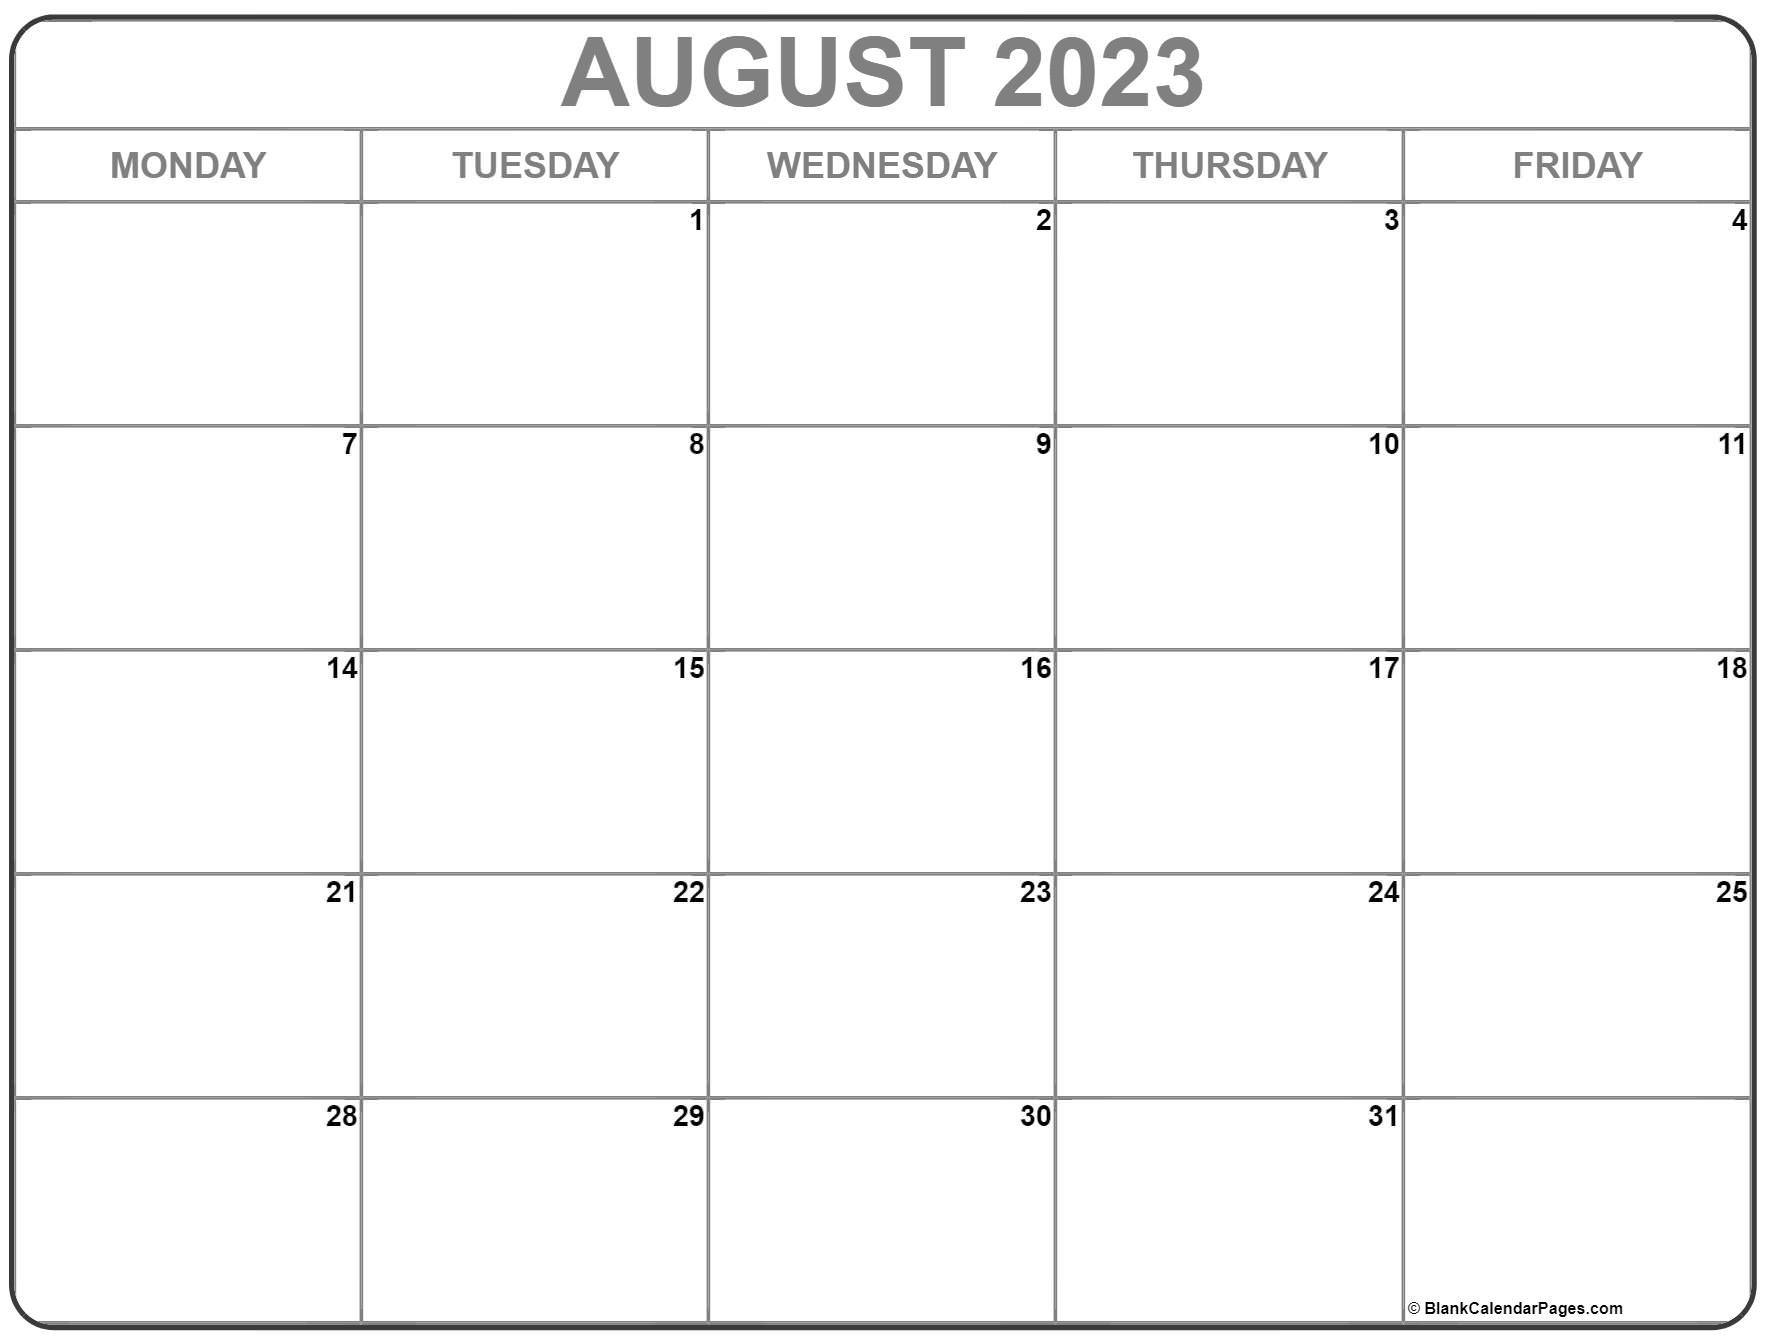 august-2023-monday-calendar-monday-to-sunday